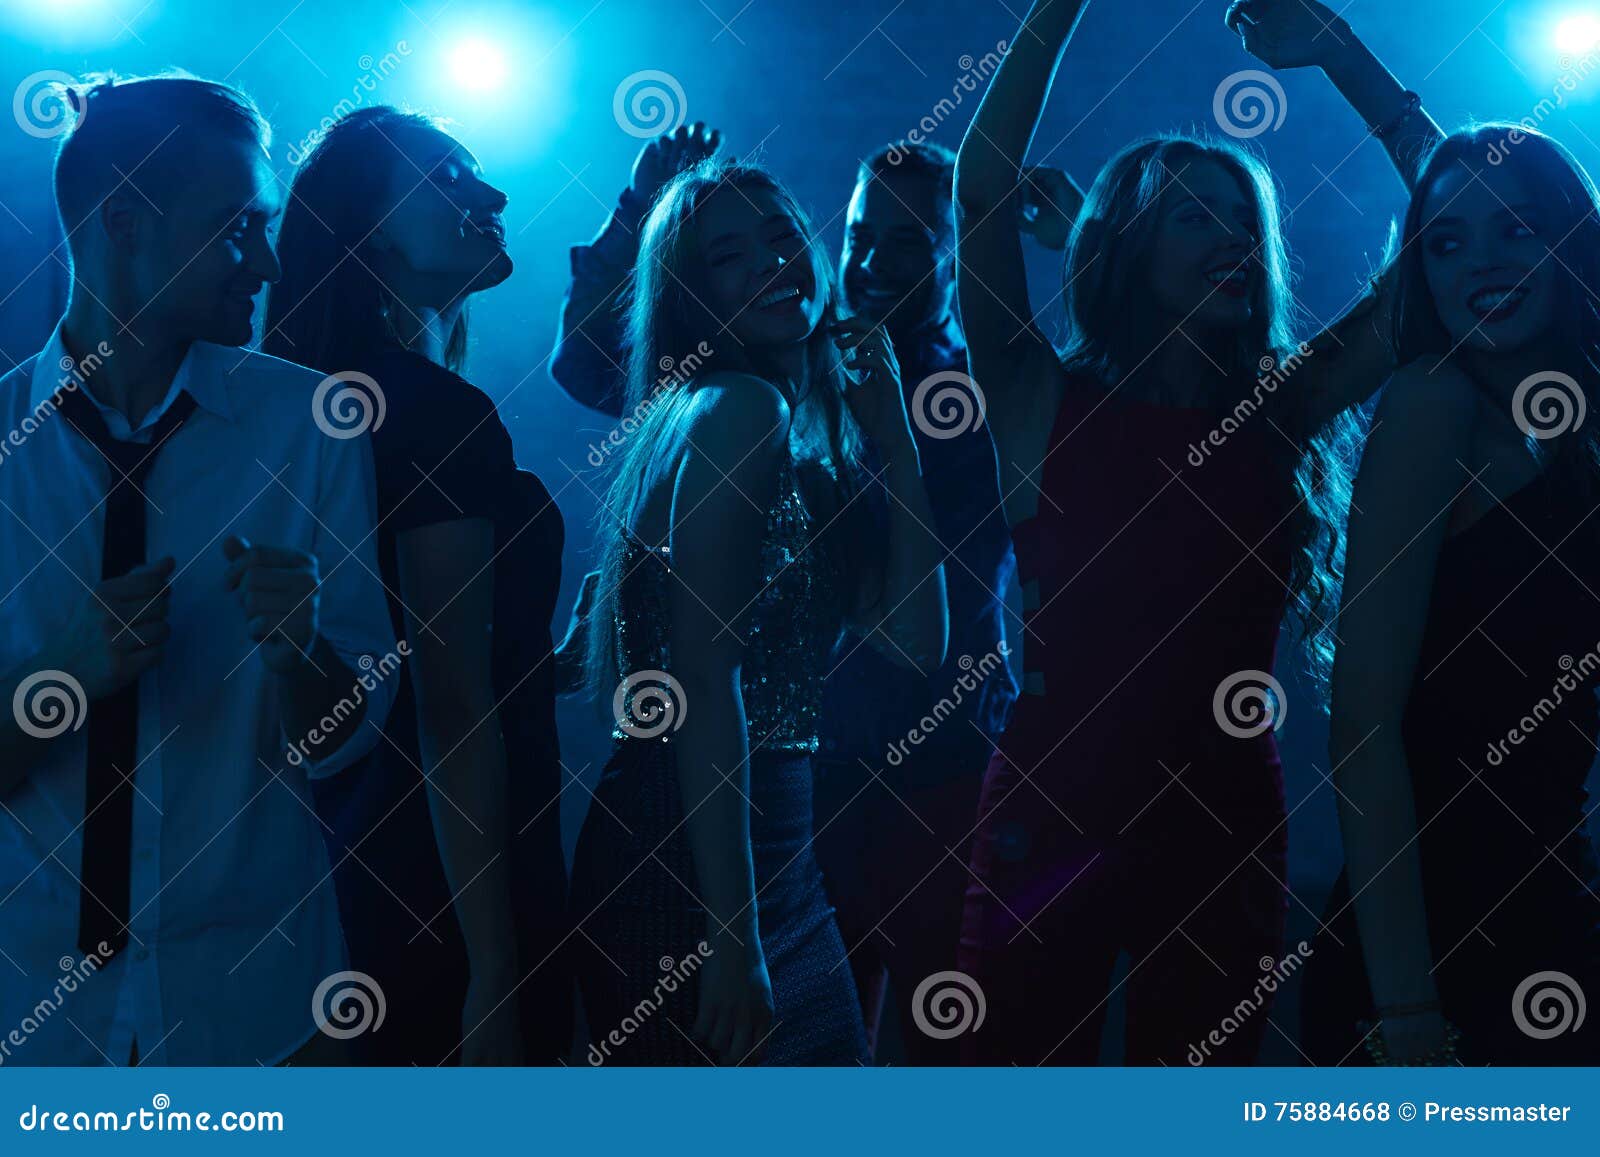 Nightlife stock photo. Image of people, disco, clubbing - 75884668